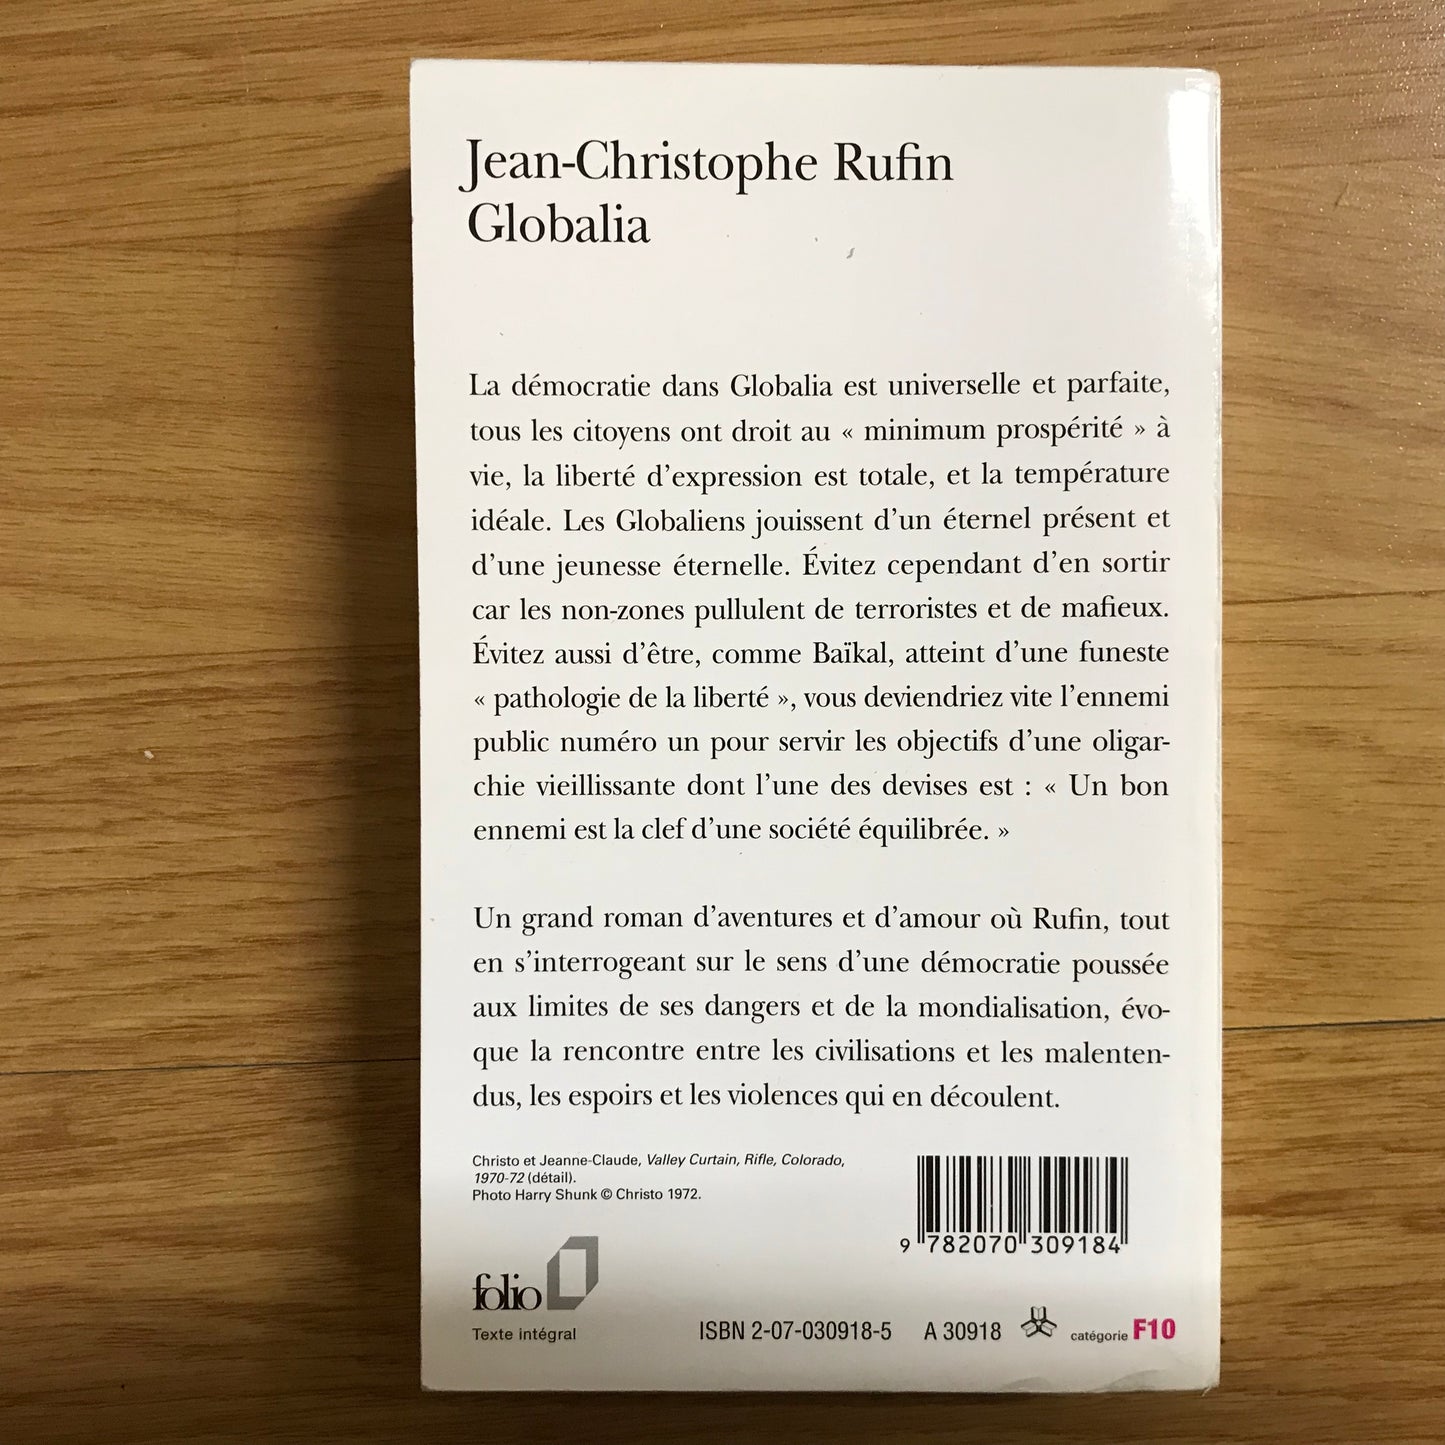 Rufin, Jean-Christophe - Globalia